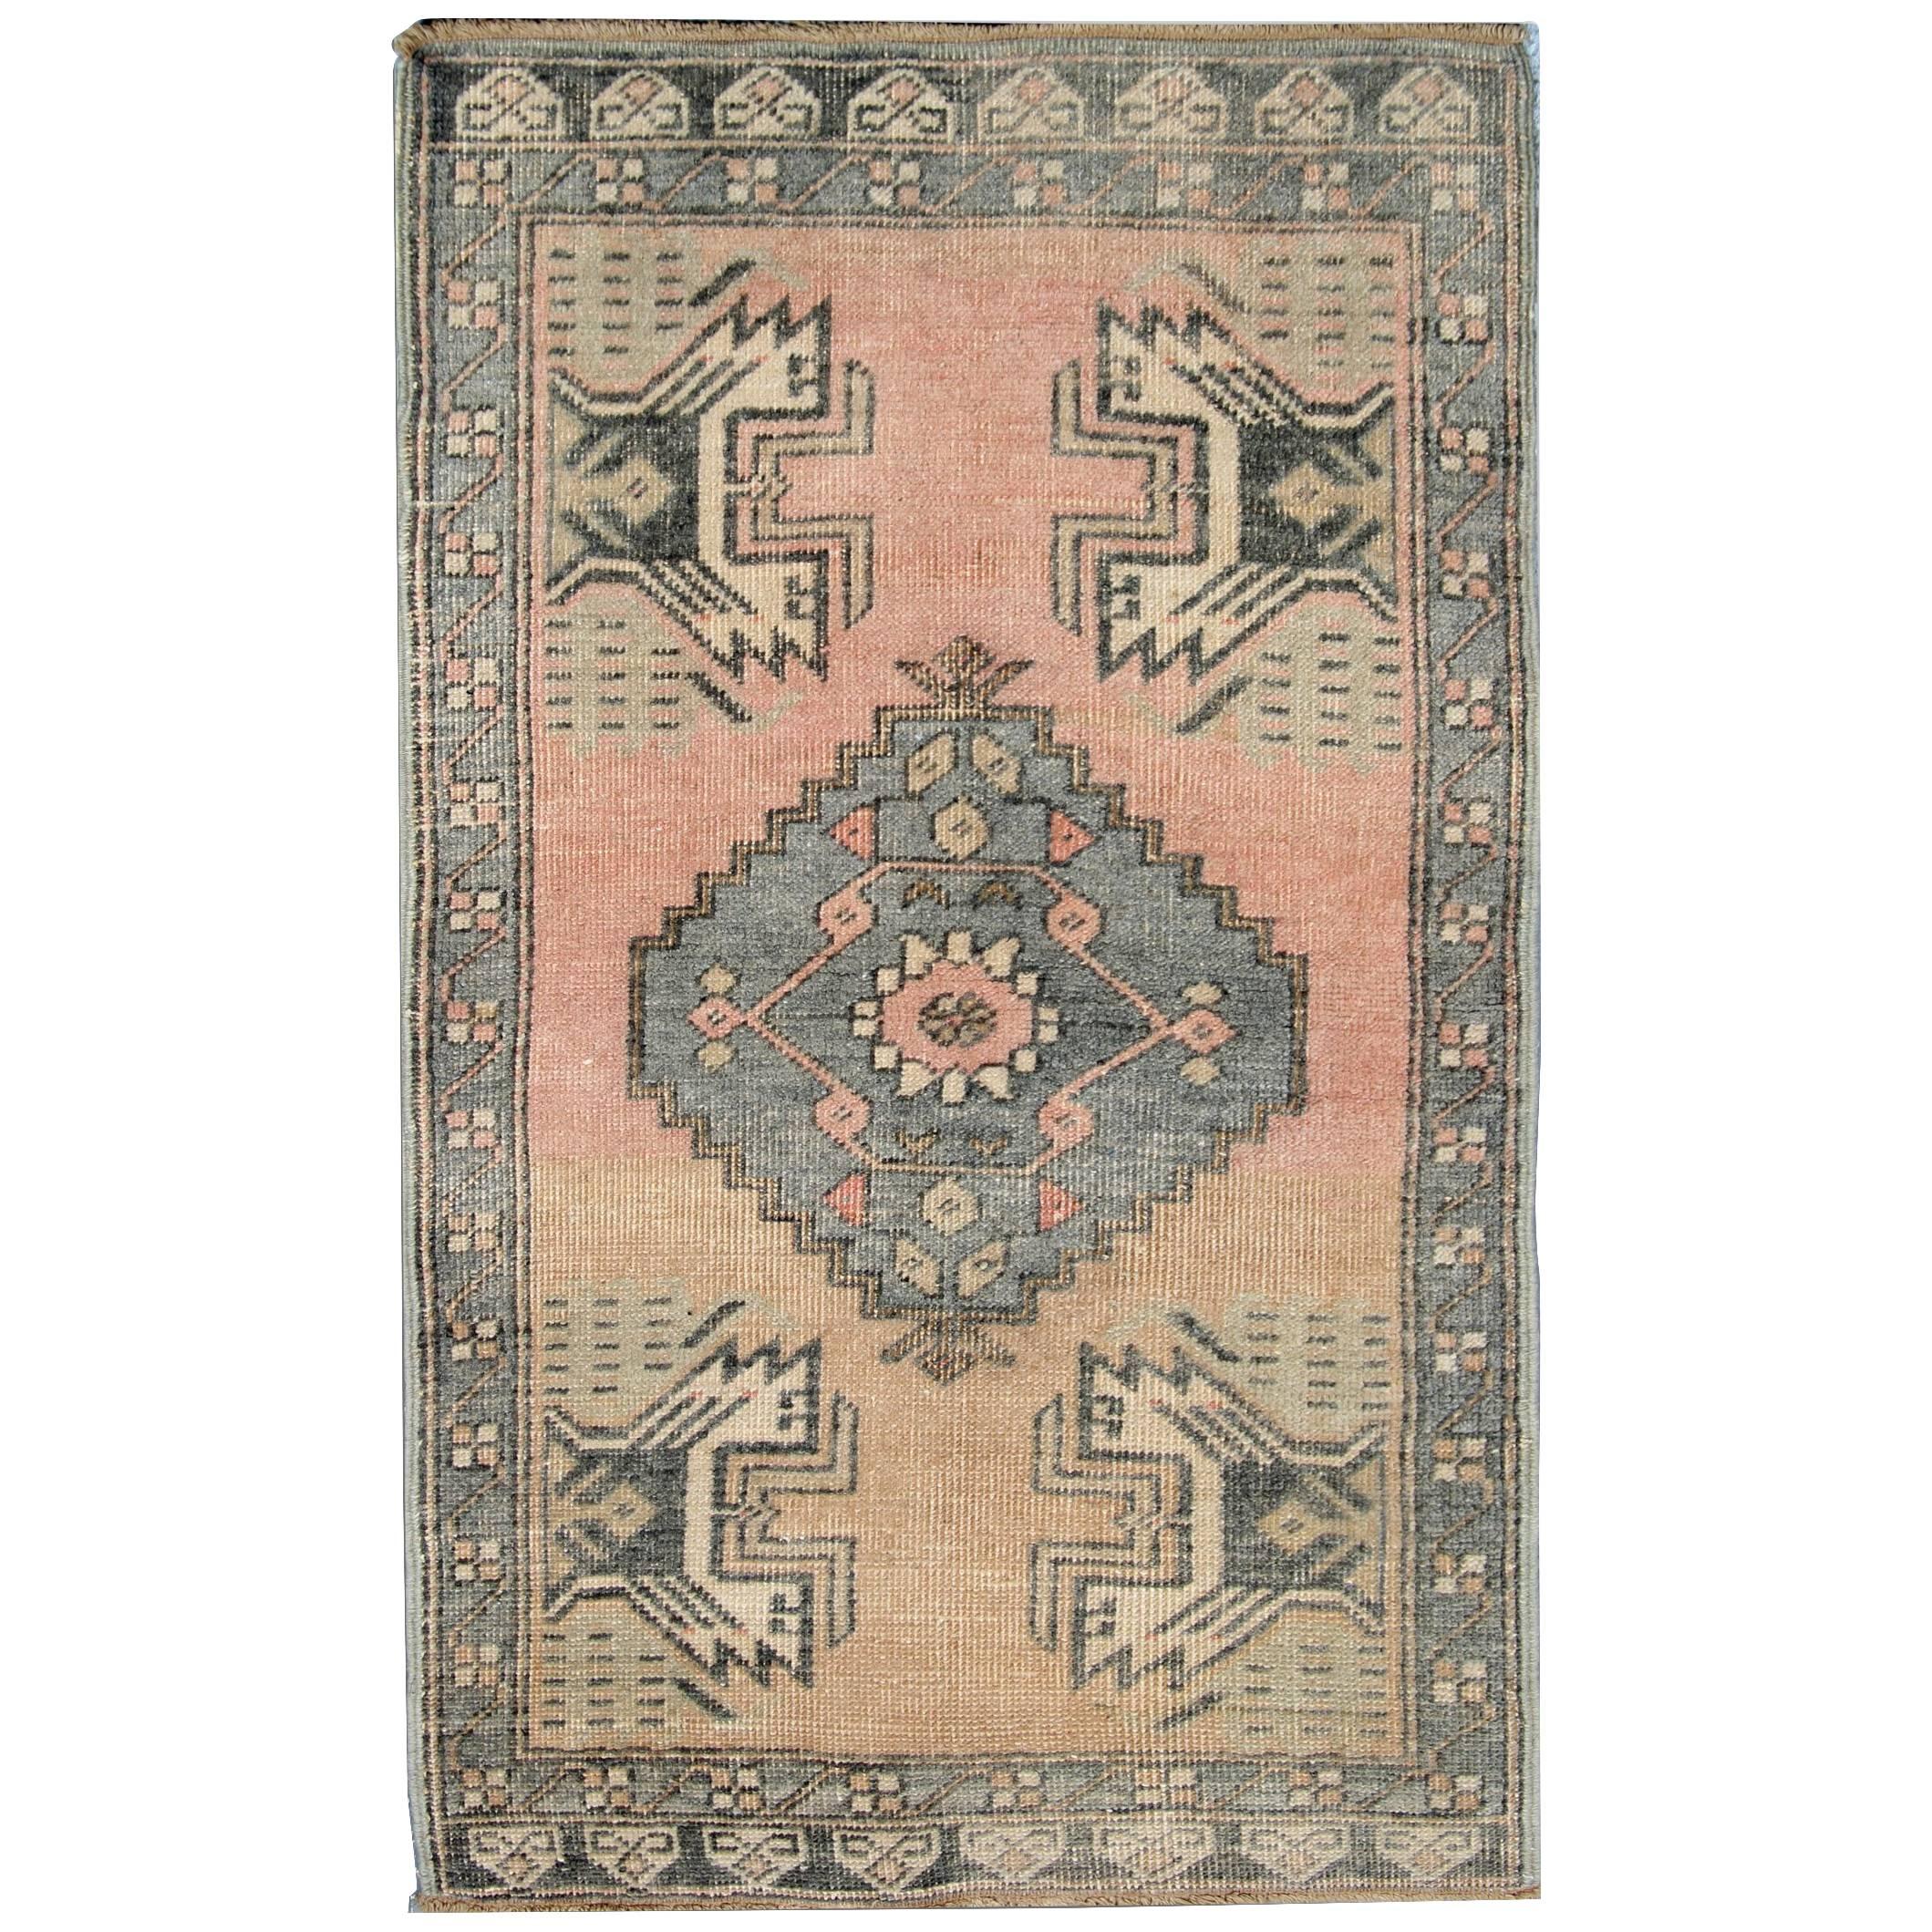 Vintage Rugs, Small Turkish Rugs, Handmade Carpet Floor Mats and Door Mats 